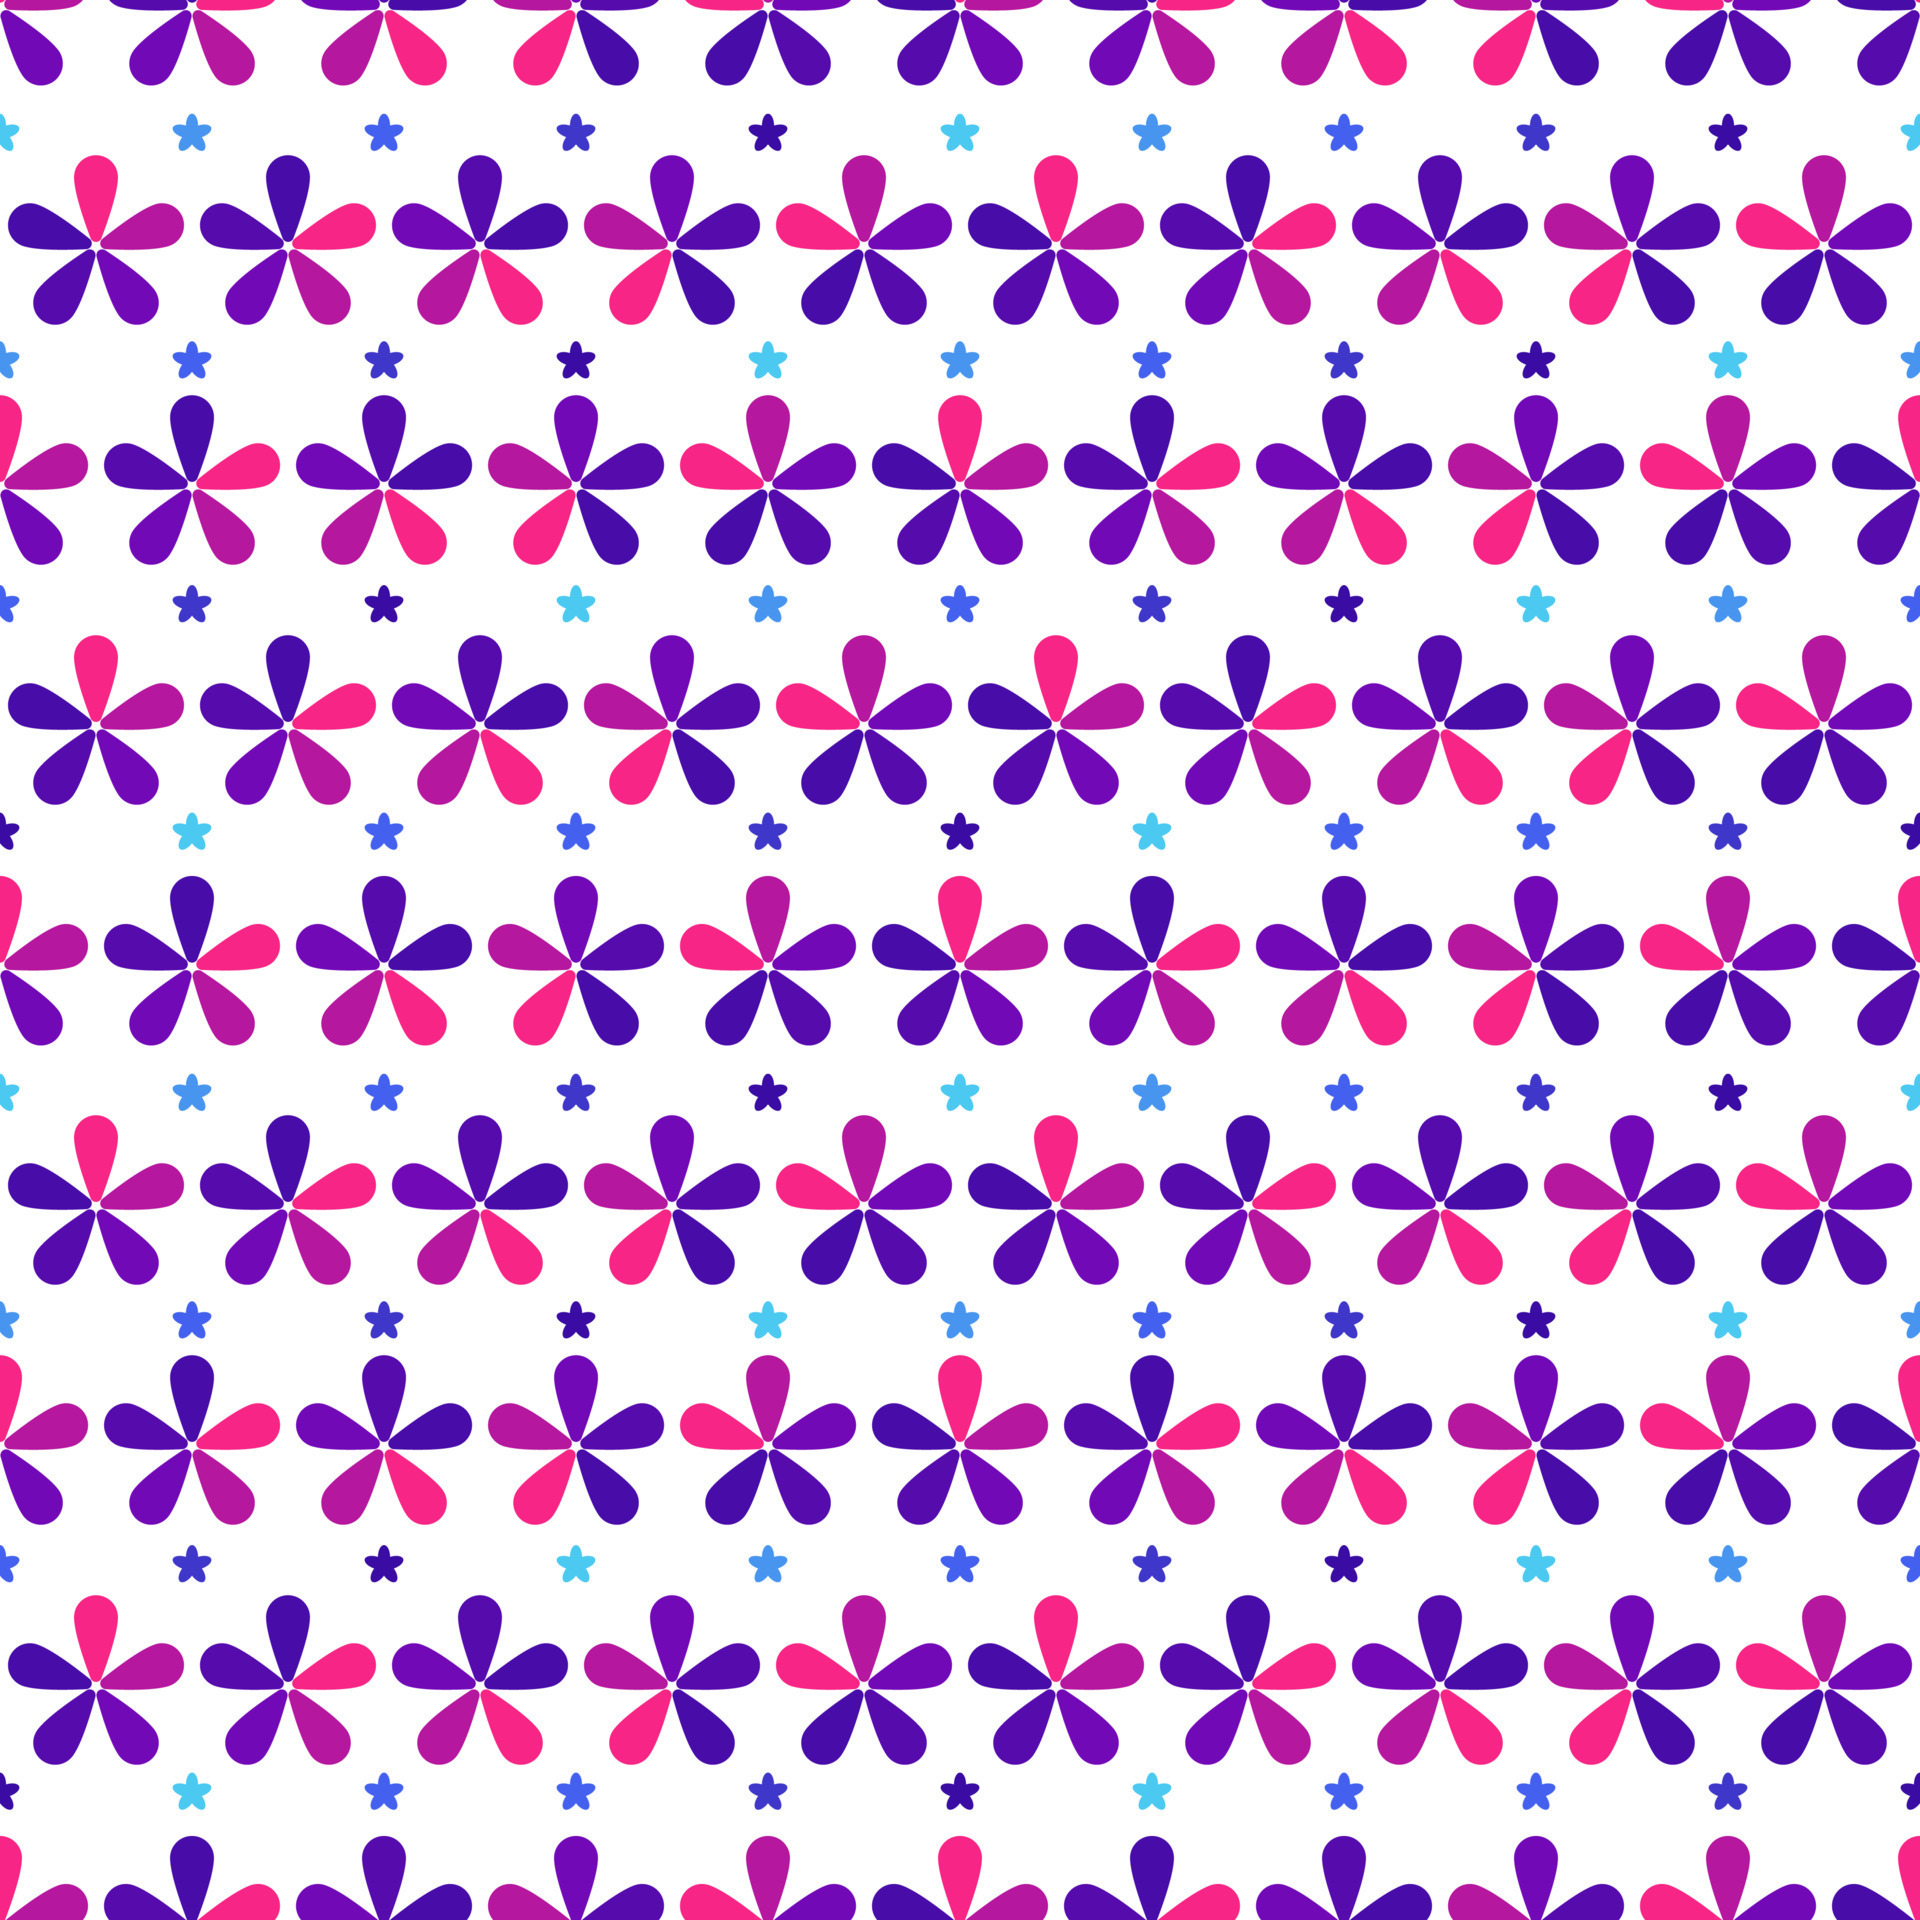 Purple Circles Fabric, Wallpaper and Home Decor